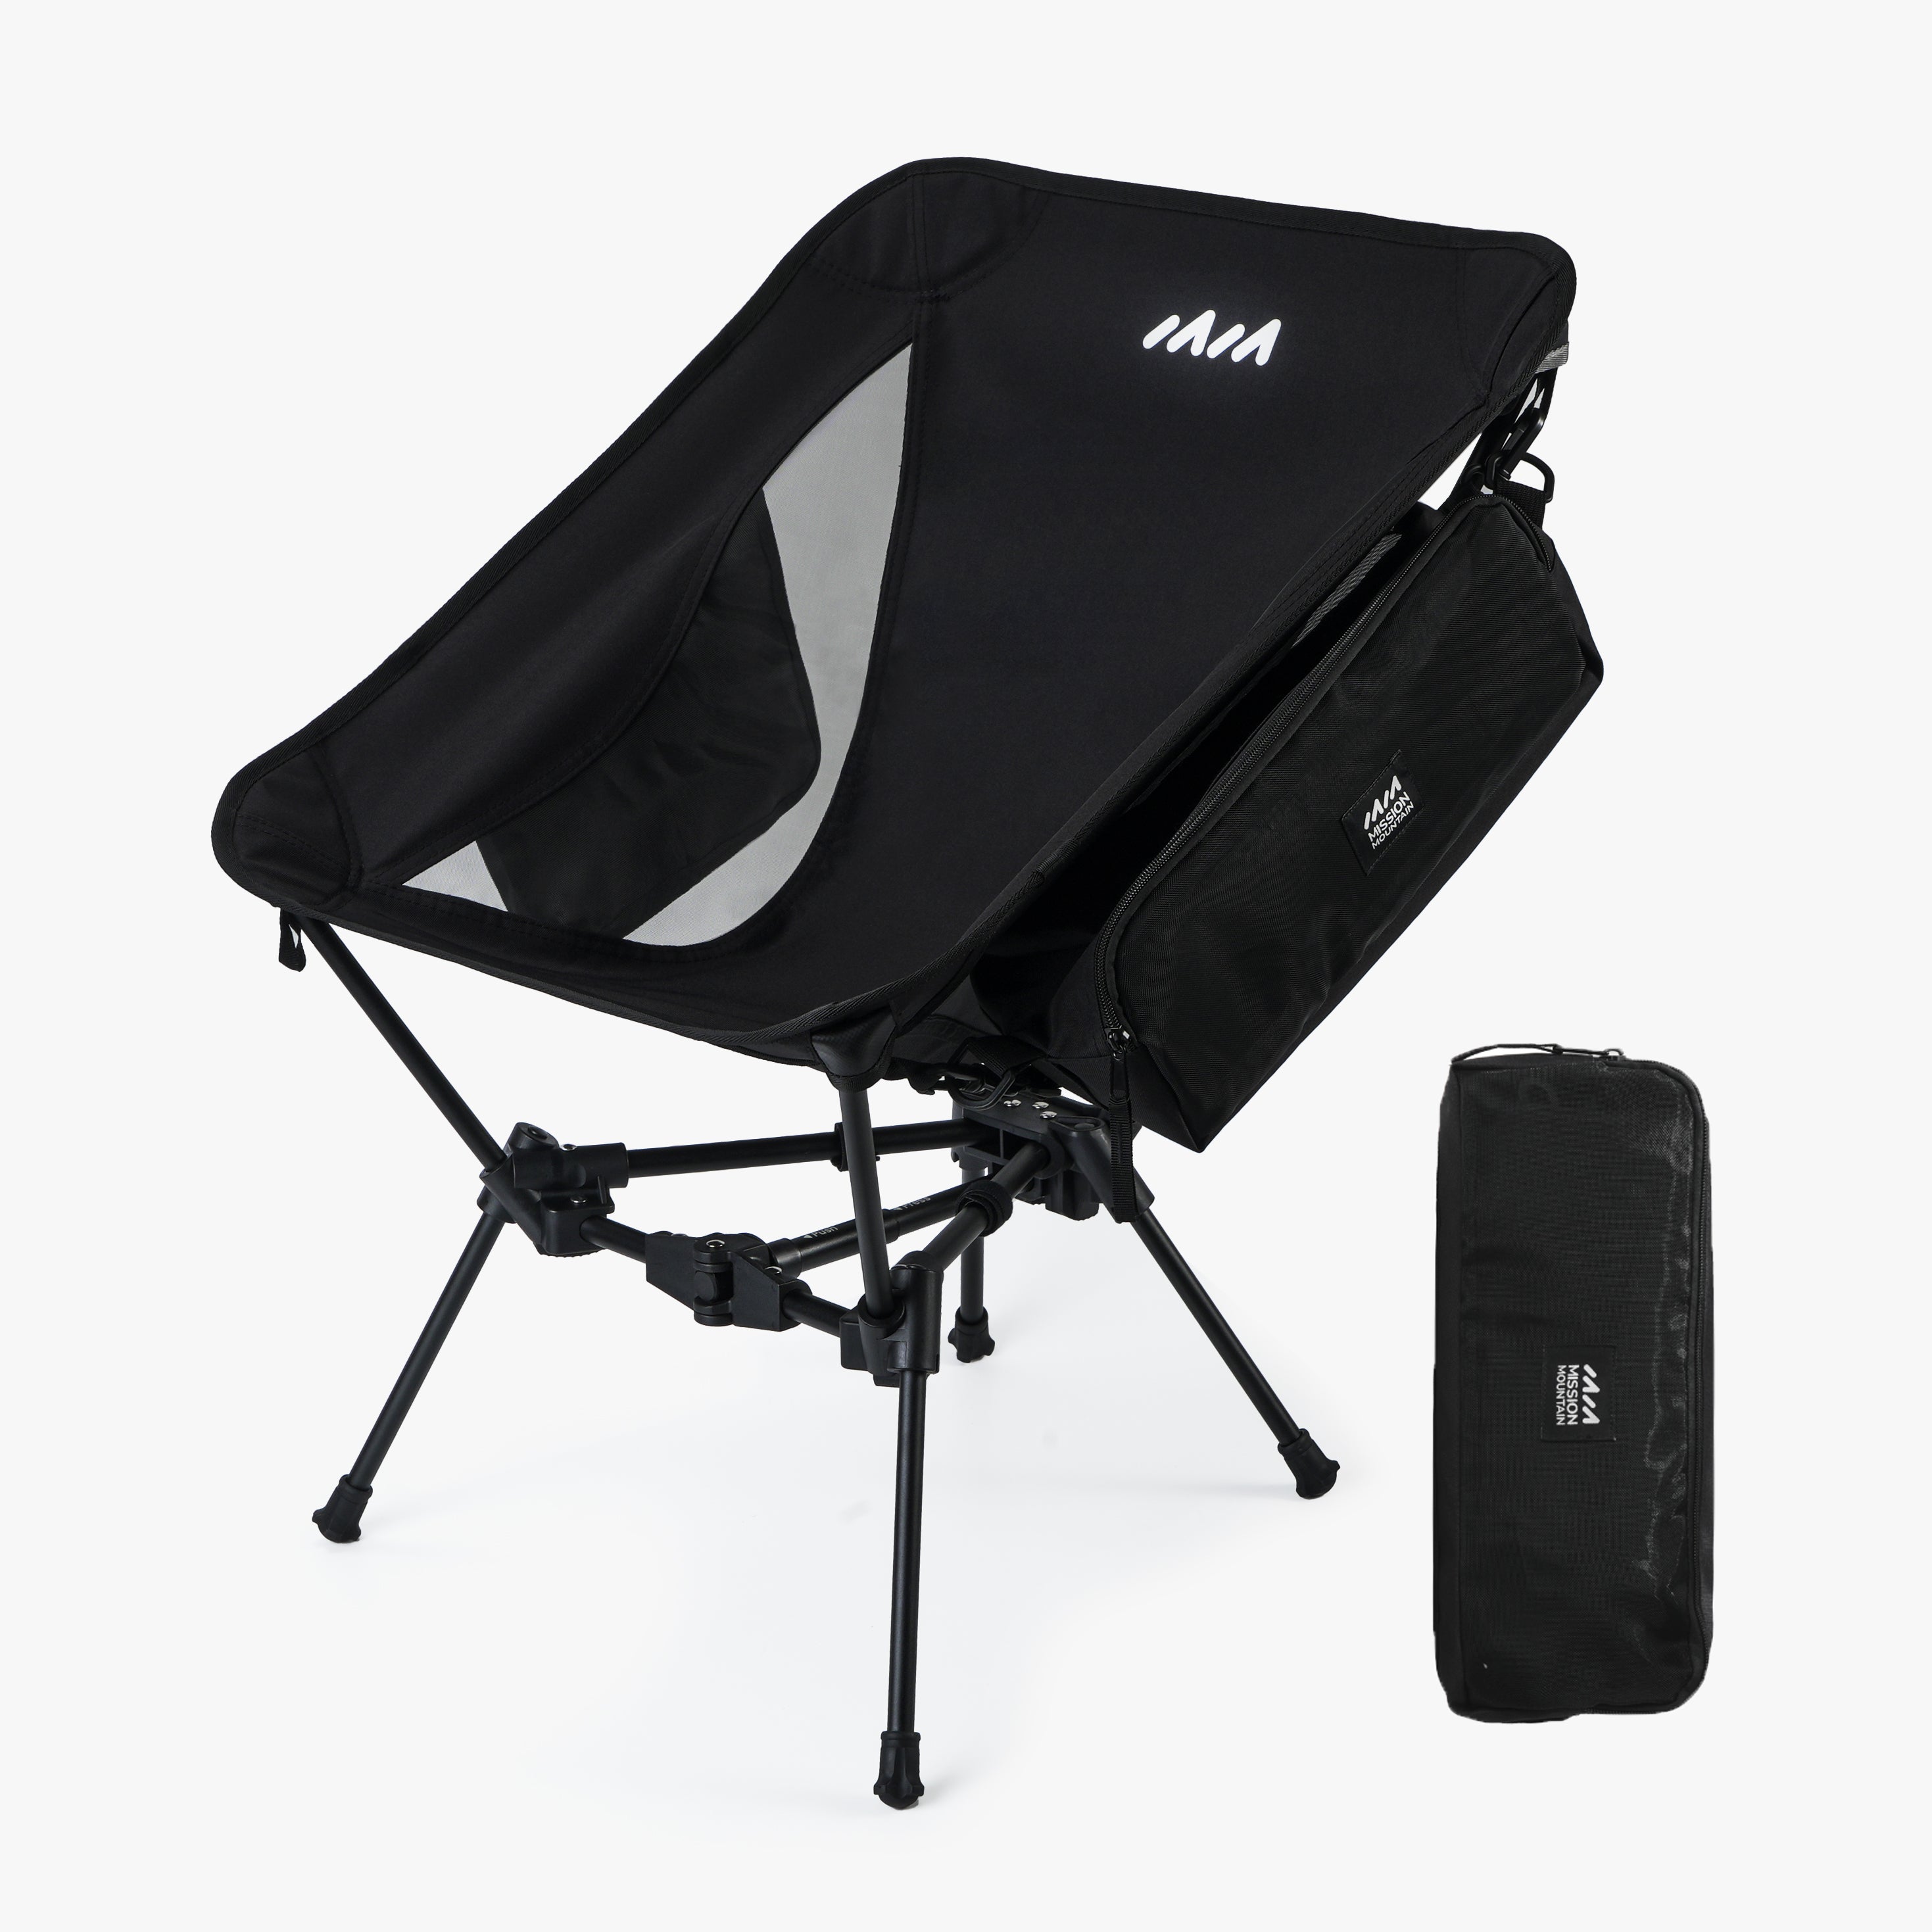 UltraPort Folding Chair